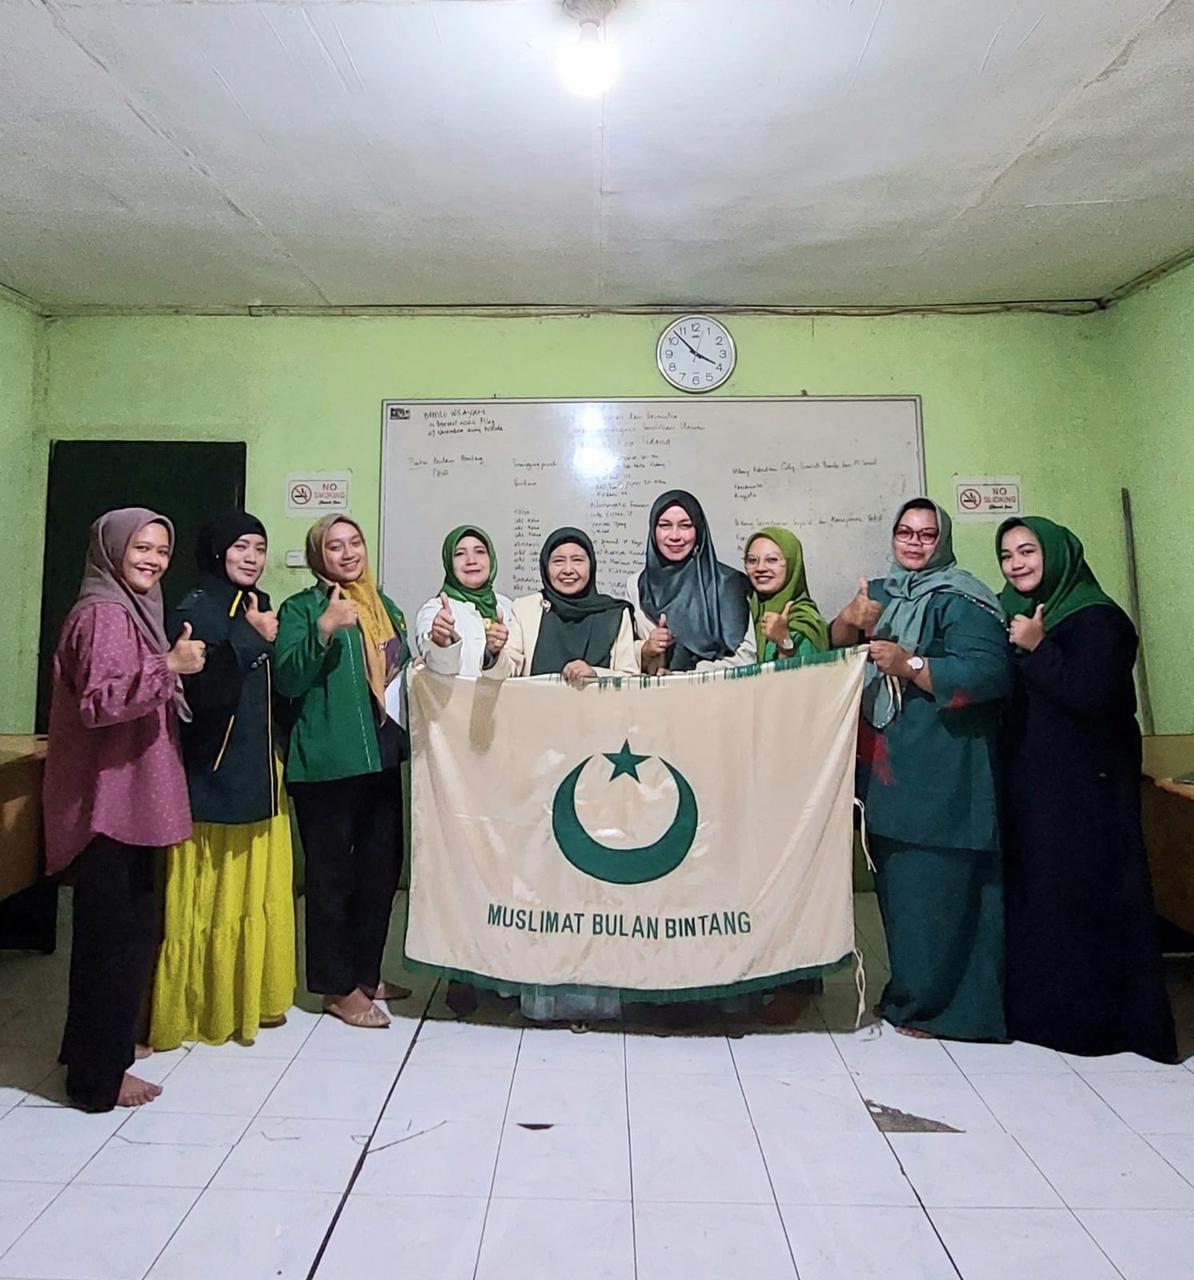 Ketum Muslimat Bulan Bintang Lantik Pengurus PW MBB Sumbar